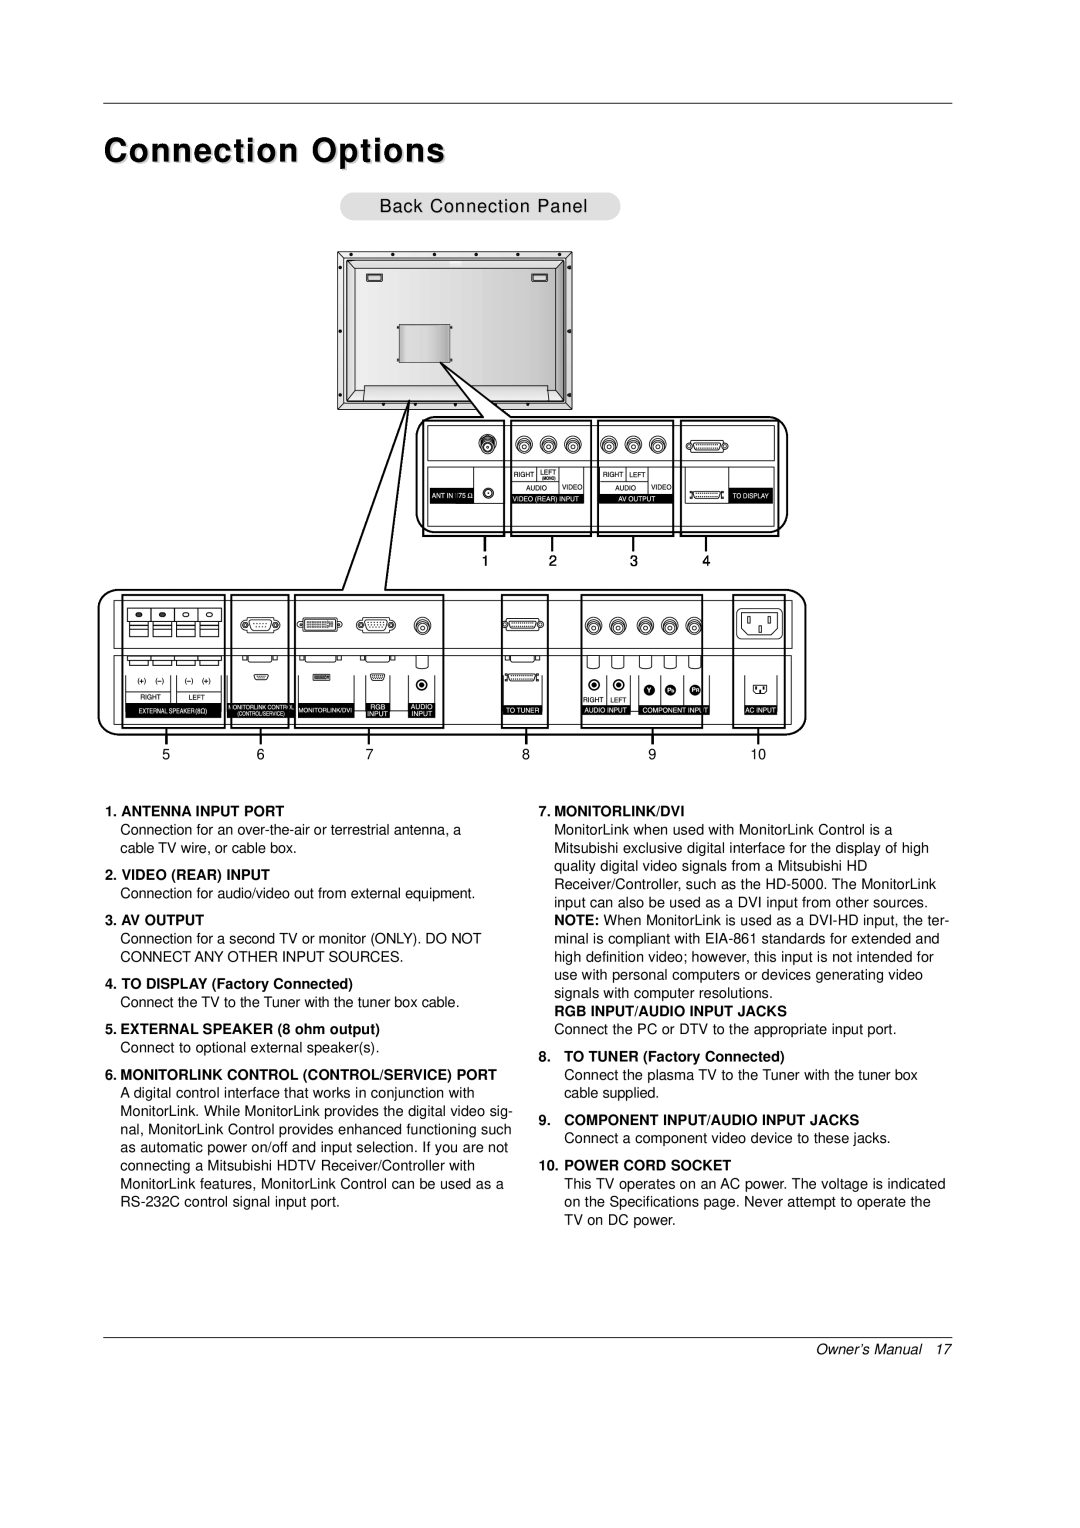 Mitsubishi Electronics PD-4225S manual Connection Options, Antenna Input Port, Video Rear Input, Av Output, Monitorlink/Dvi 